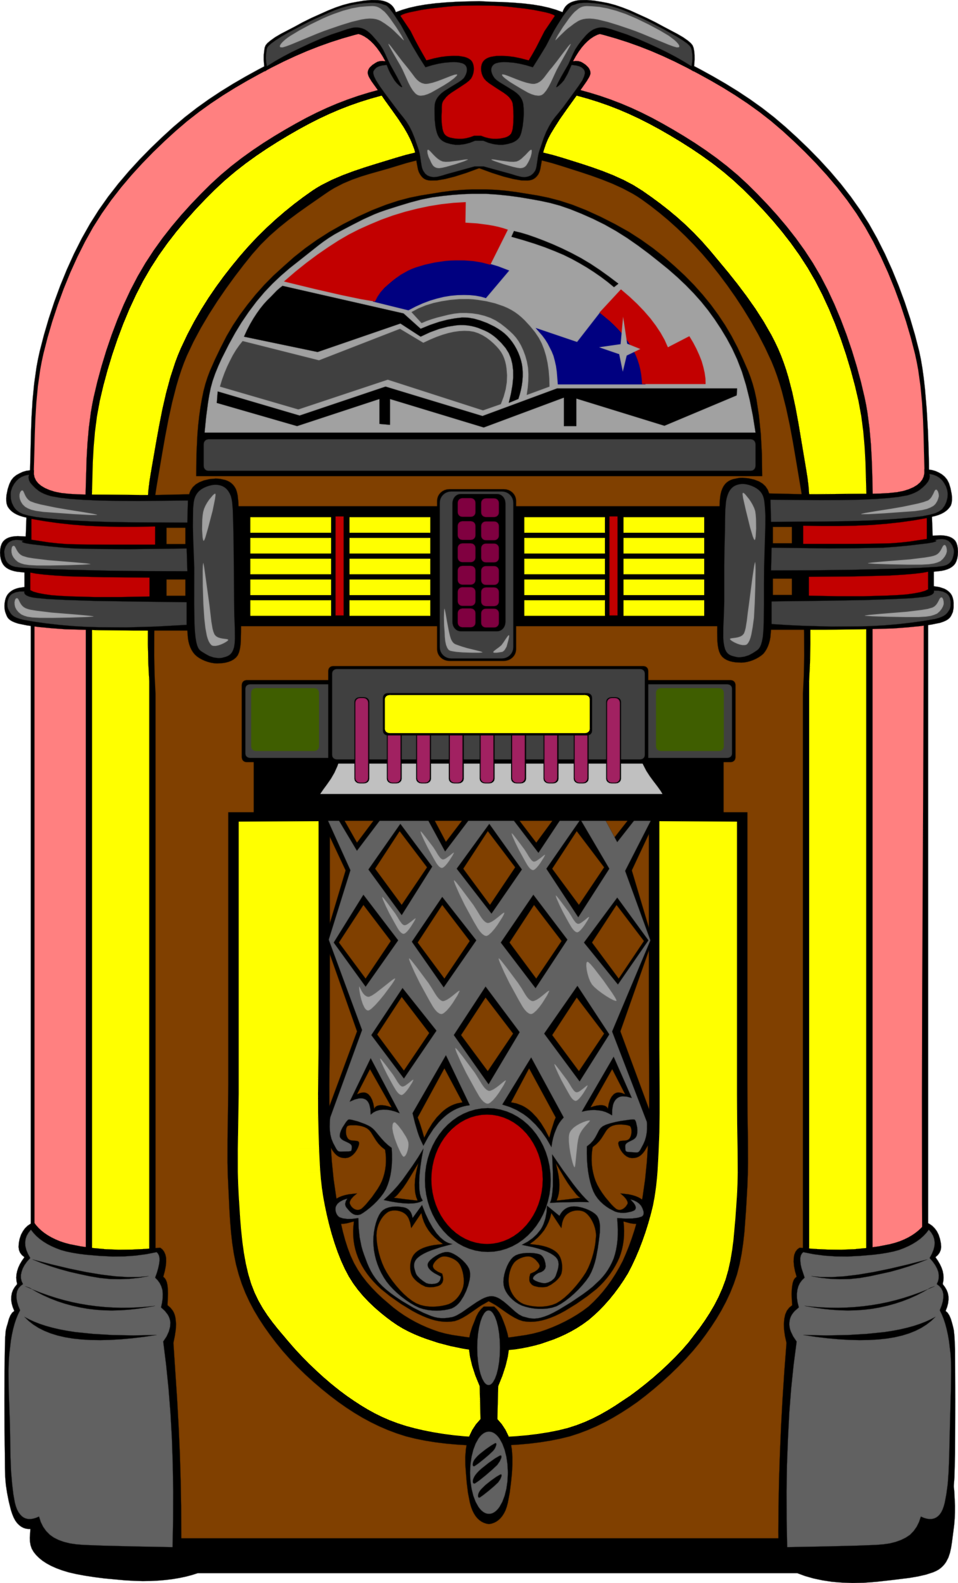 Jukebox clipart clip art. Public domain image fifties